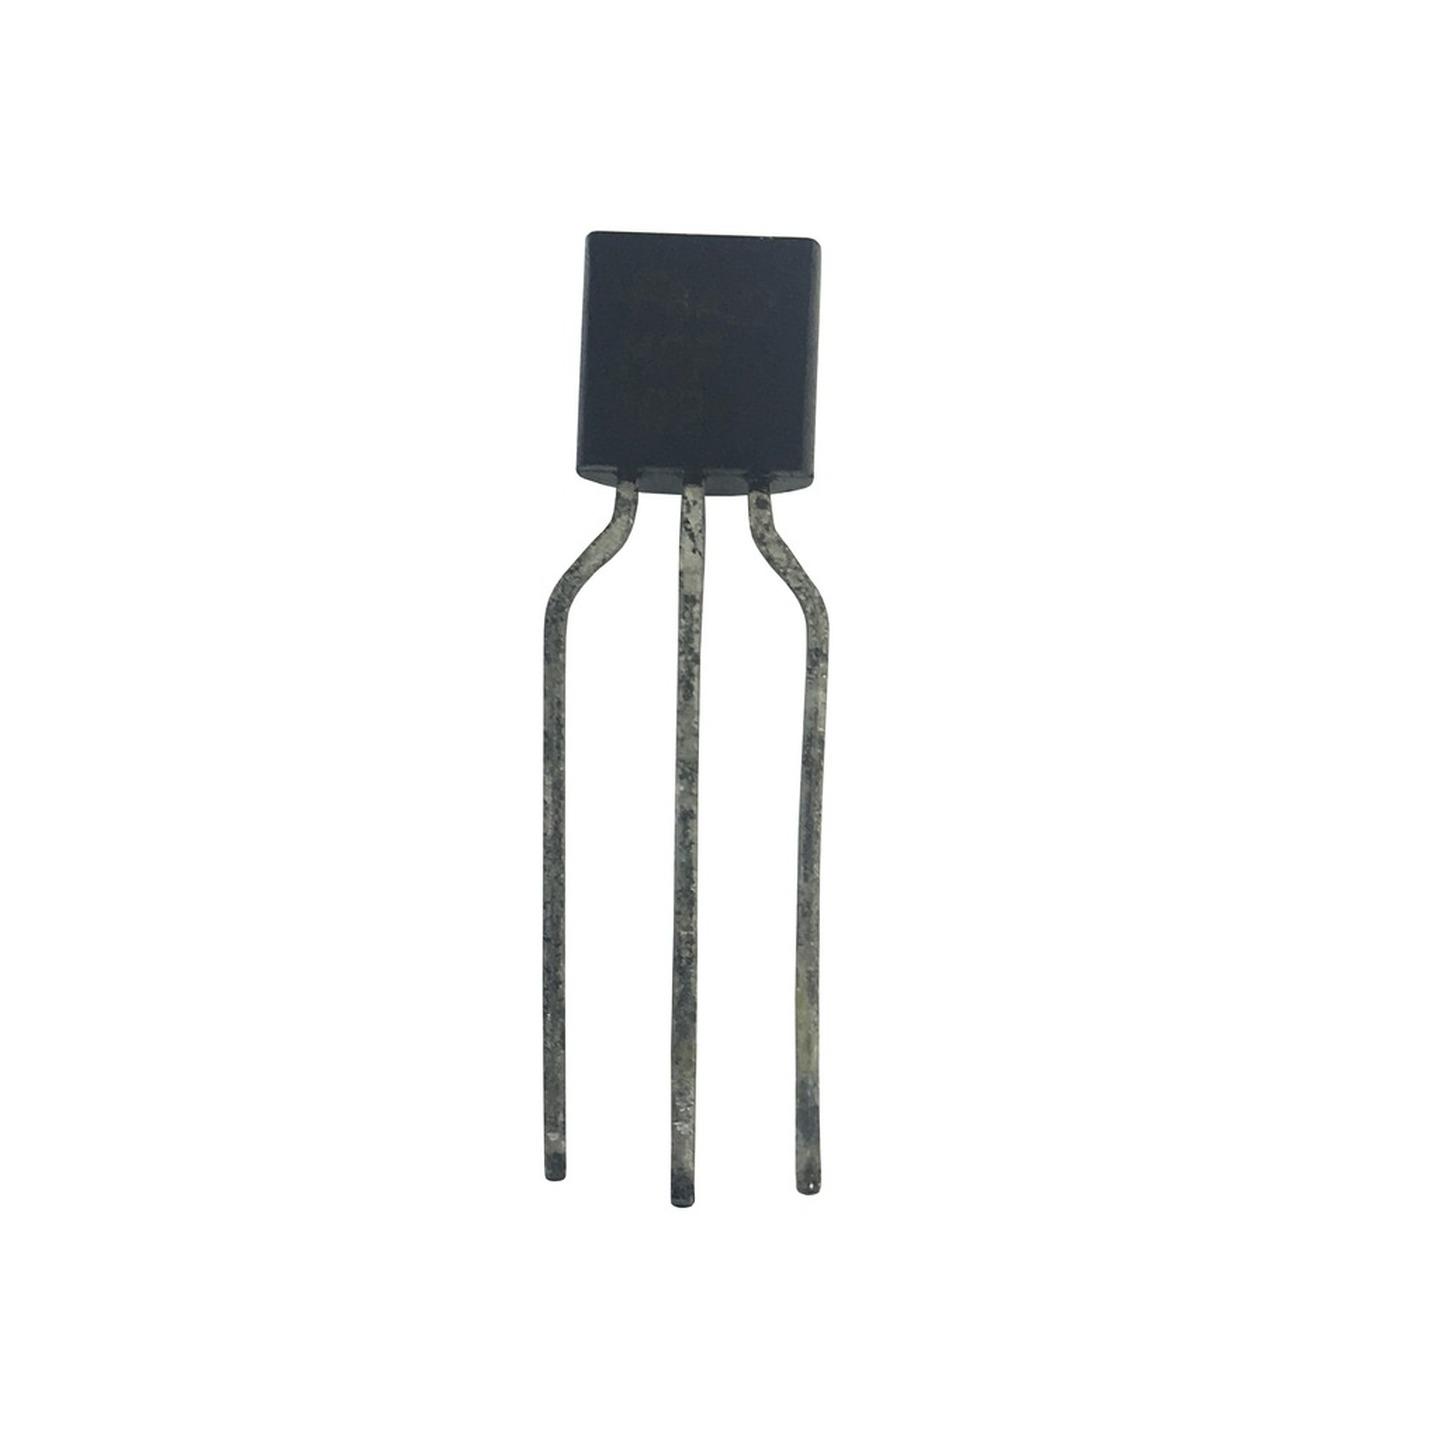 BC328 PNP Transistor